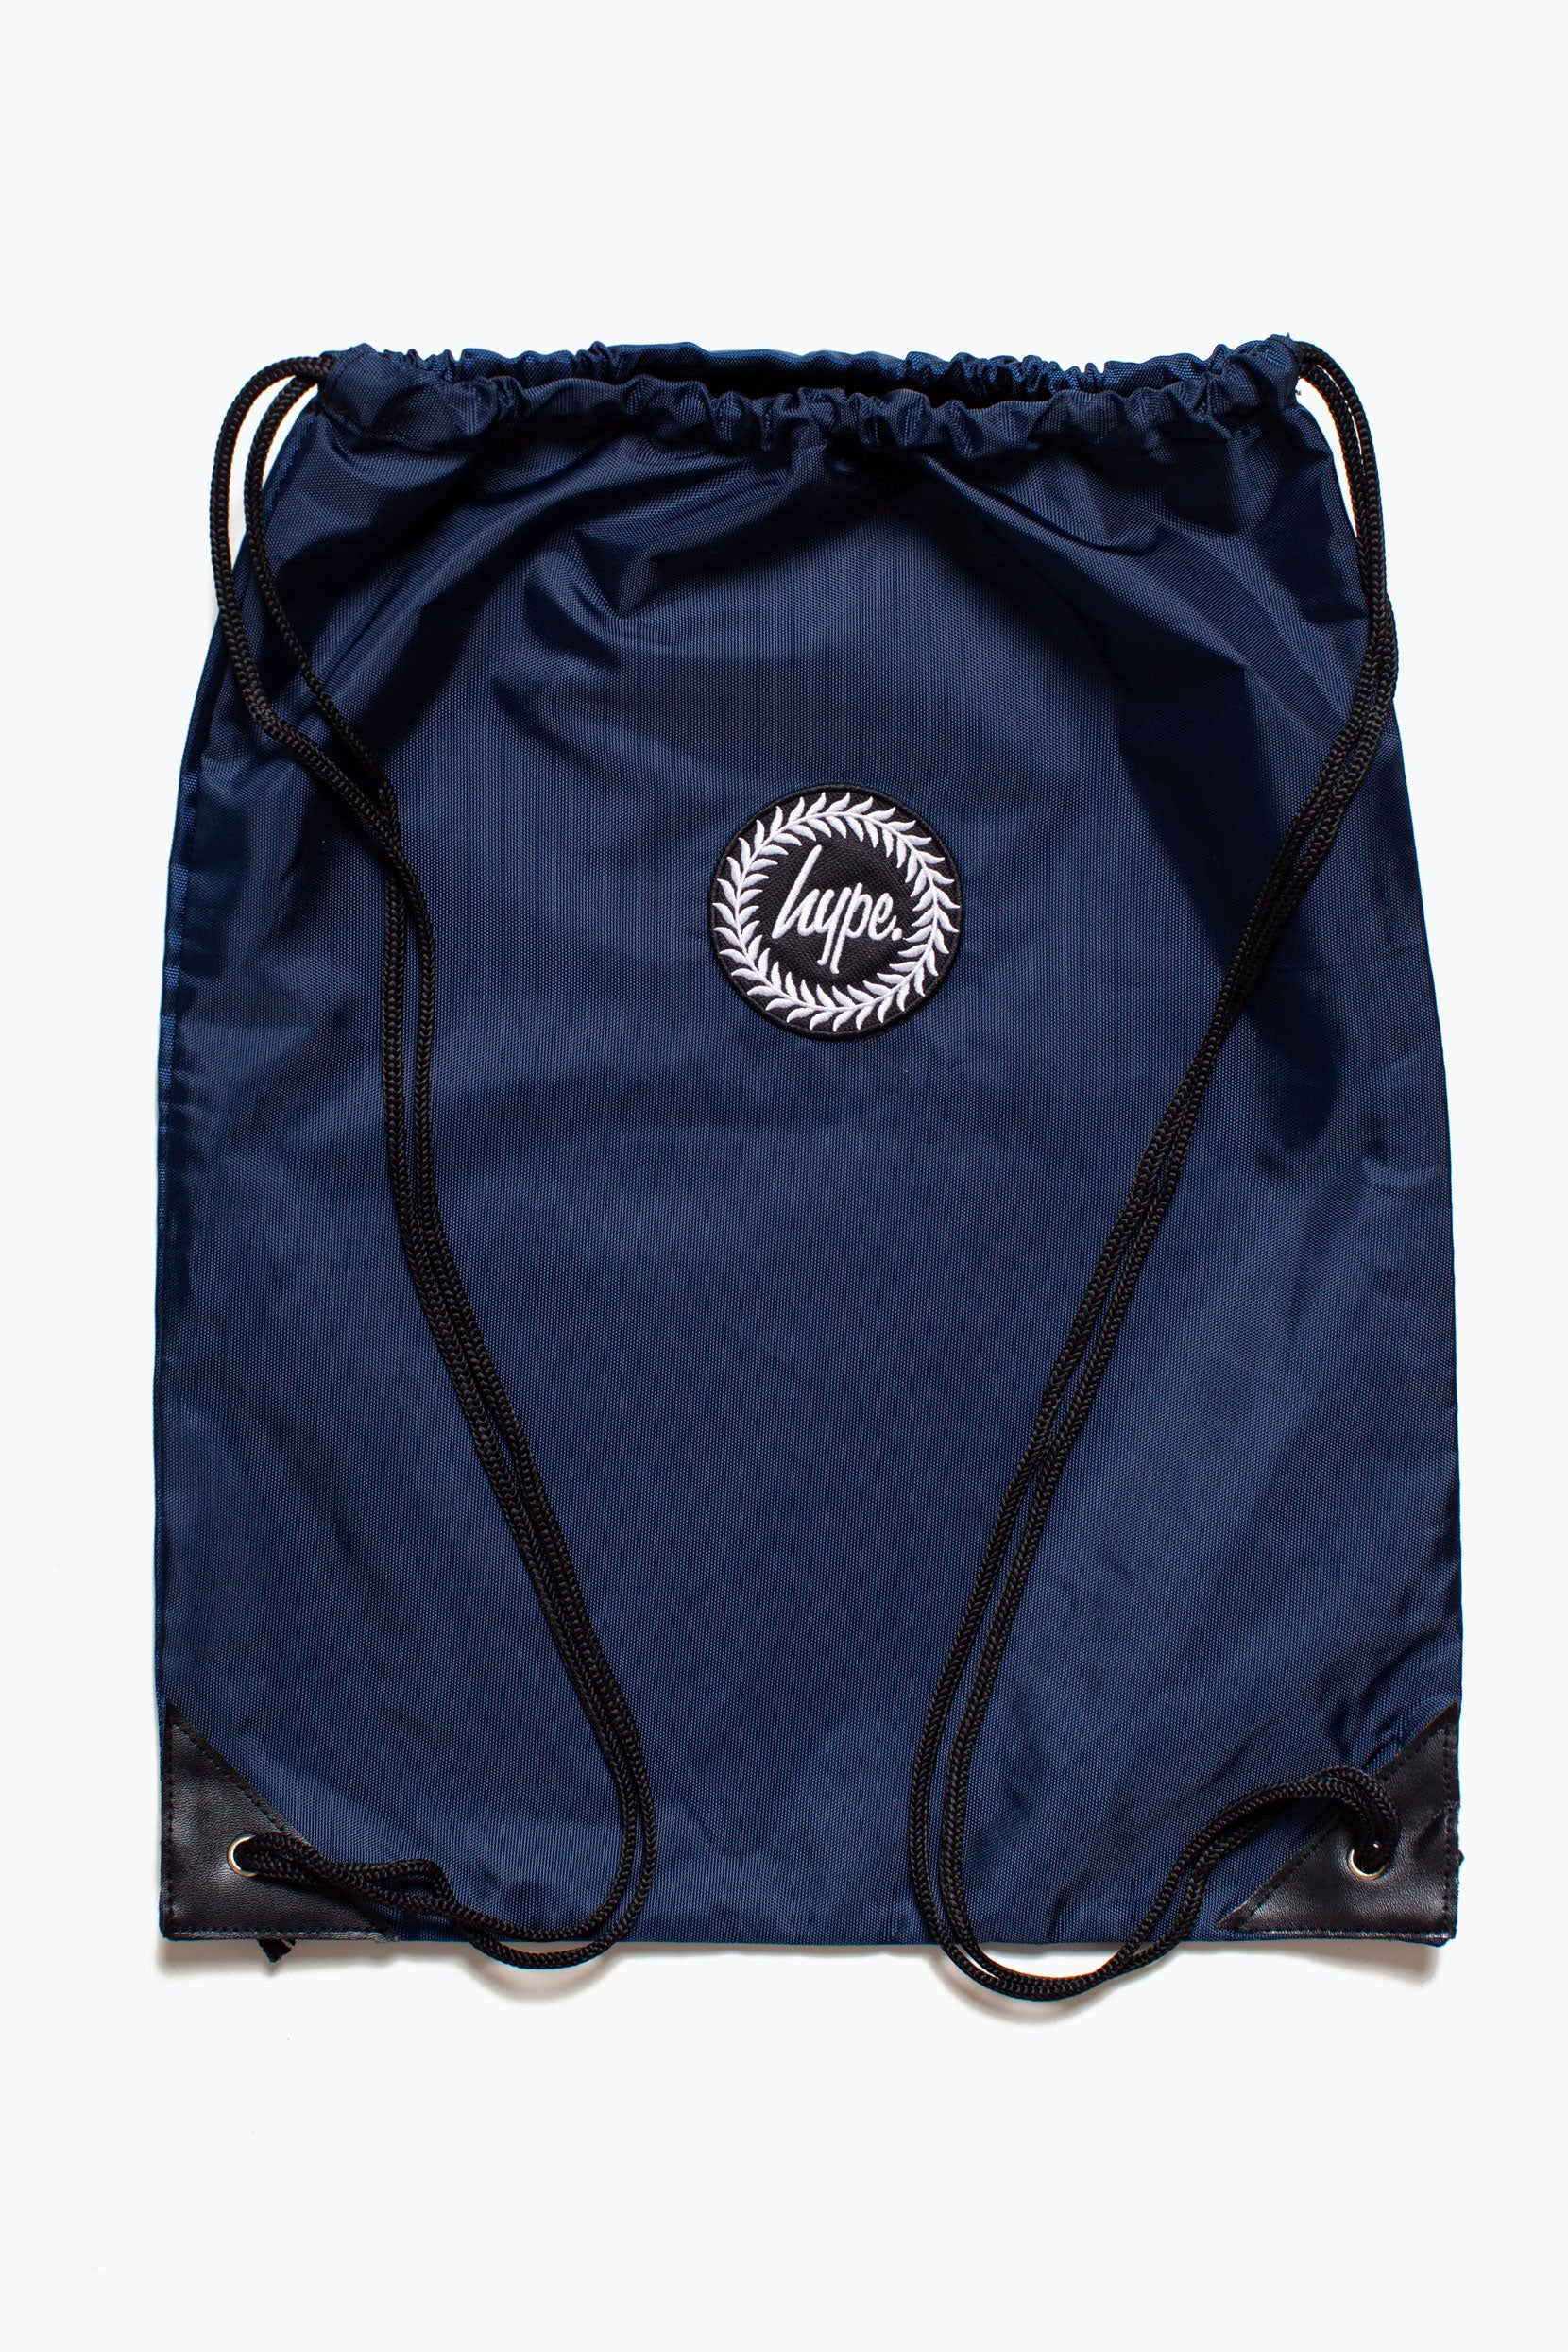 hype navy crest drawstring bag